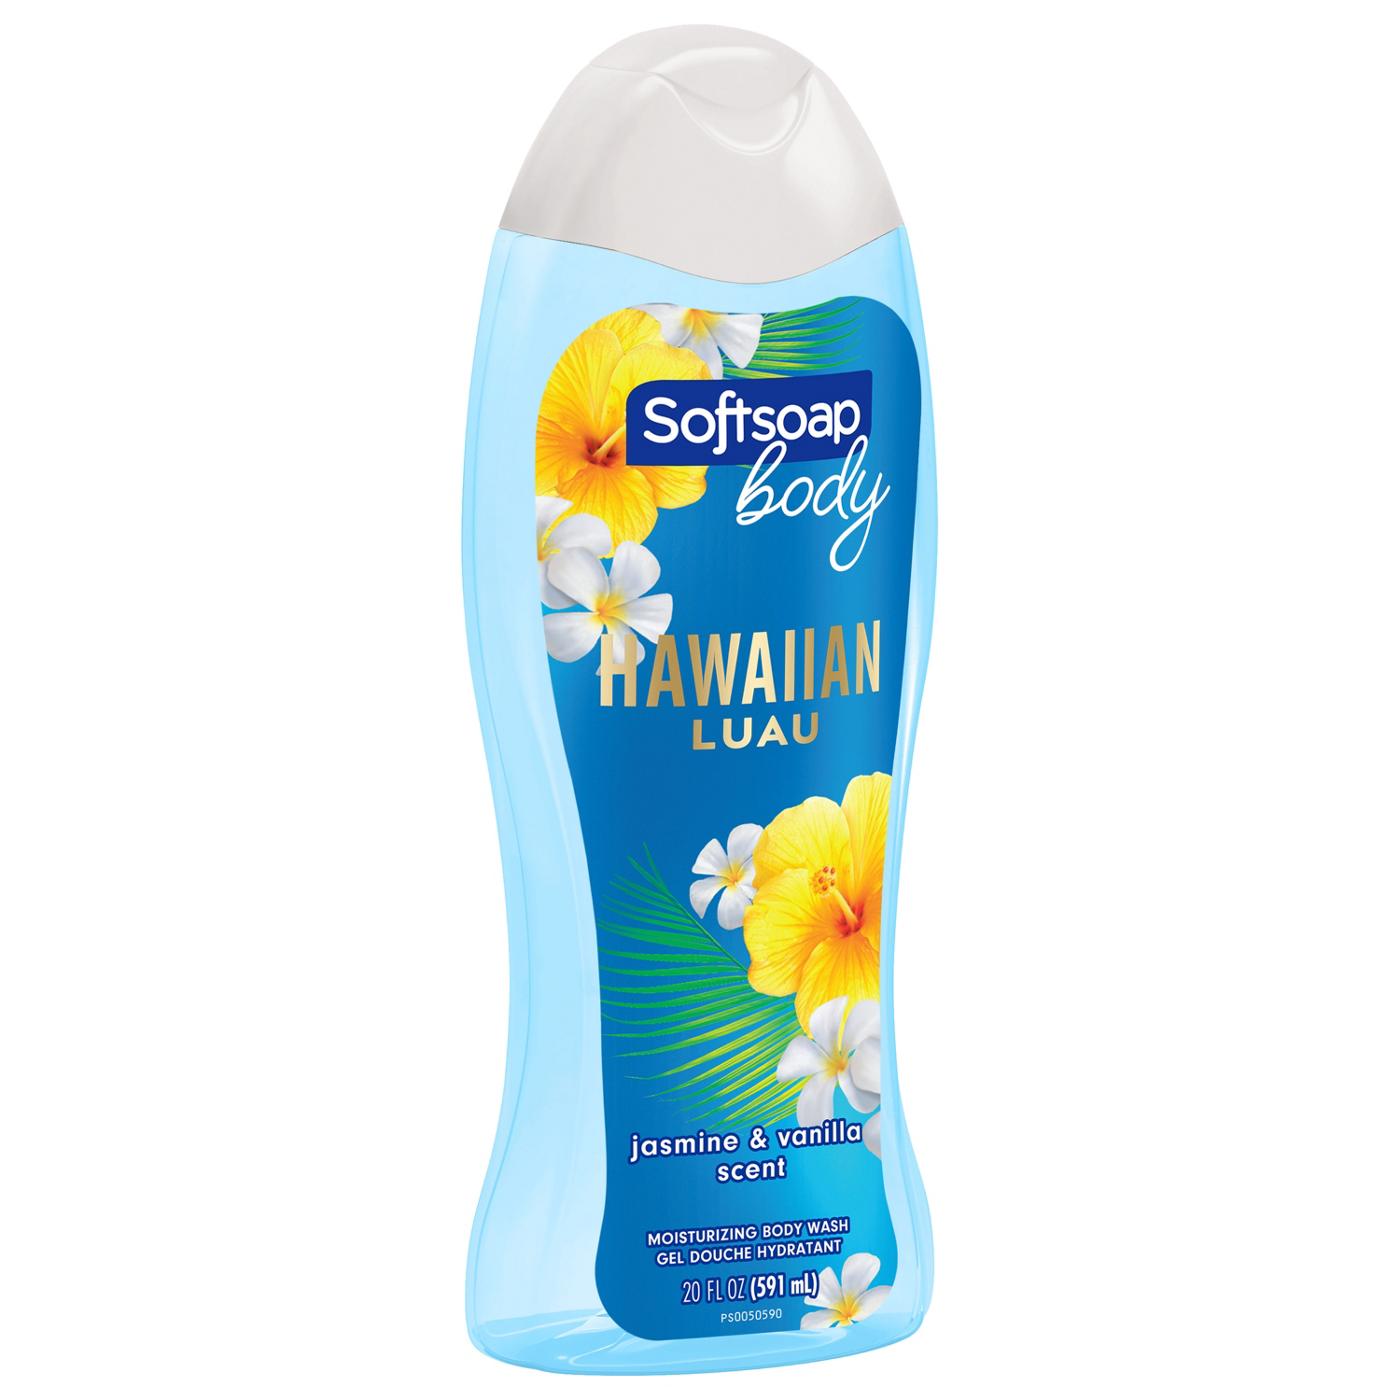 Softsoap Body Wash Hawaiian Luau - Jasmine & Vanilla Scent; image 2 of 3